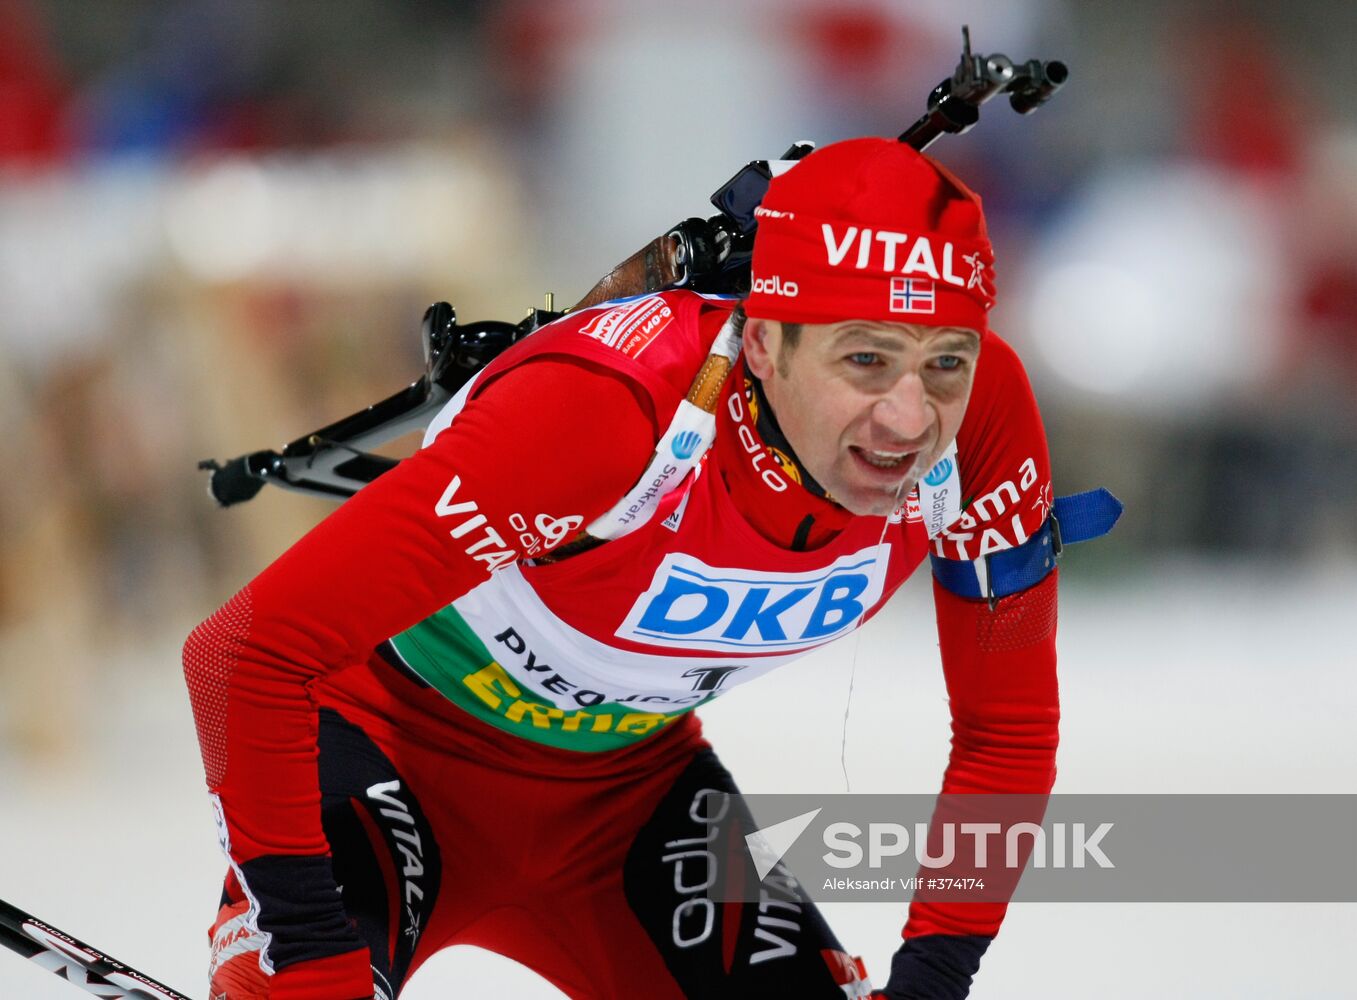 Ole-Ejnar Bjorndalen came first in men's pursuit